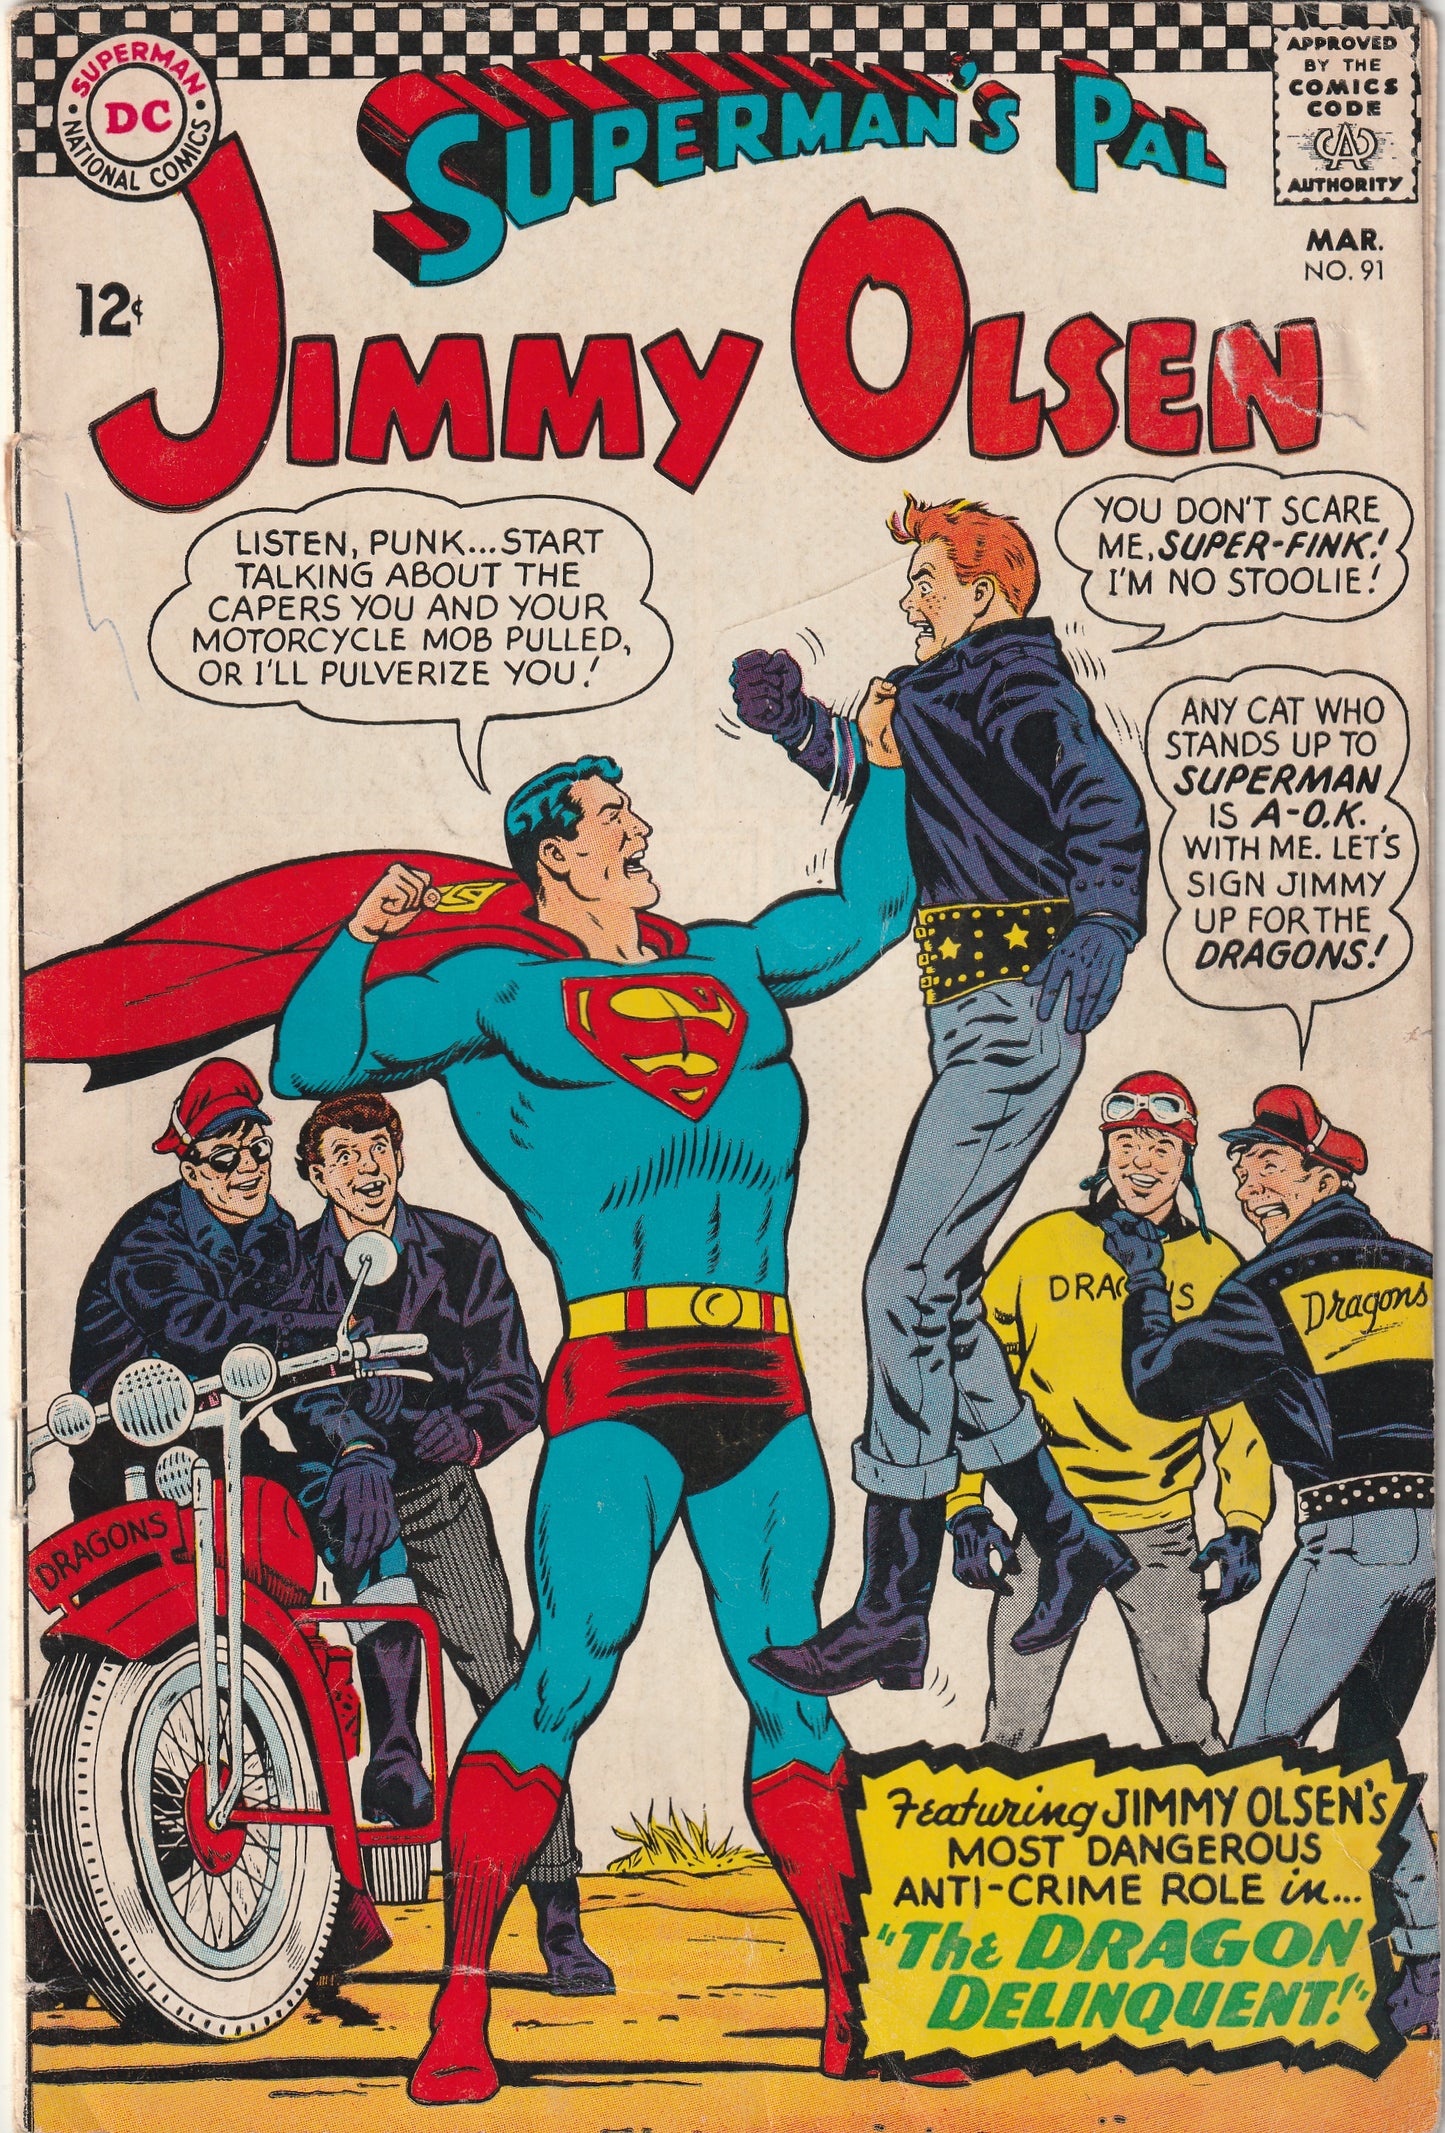 Superman's Pal, Jimmy Olsen #91 (1966)